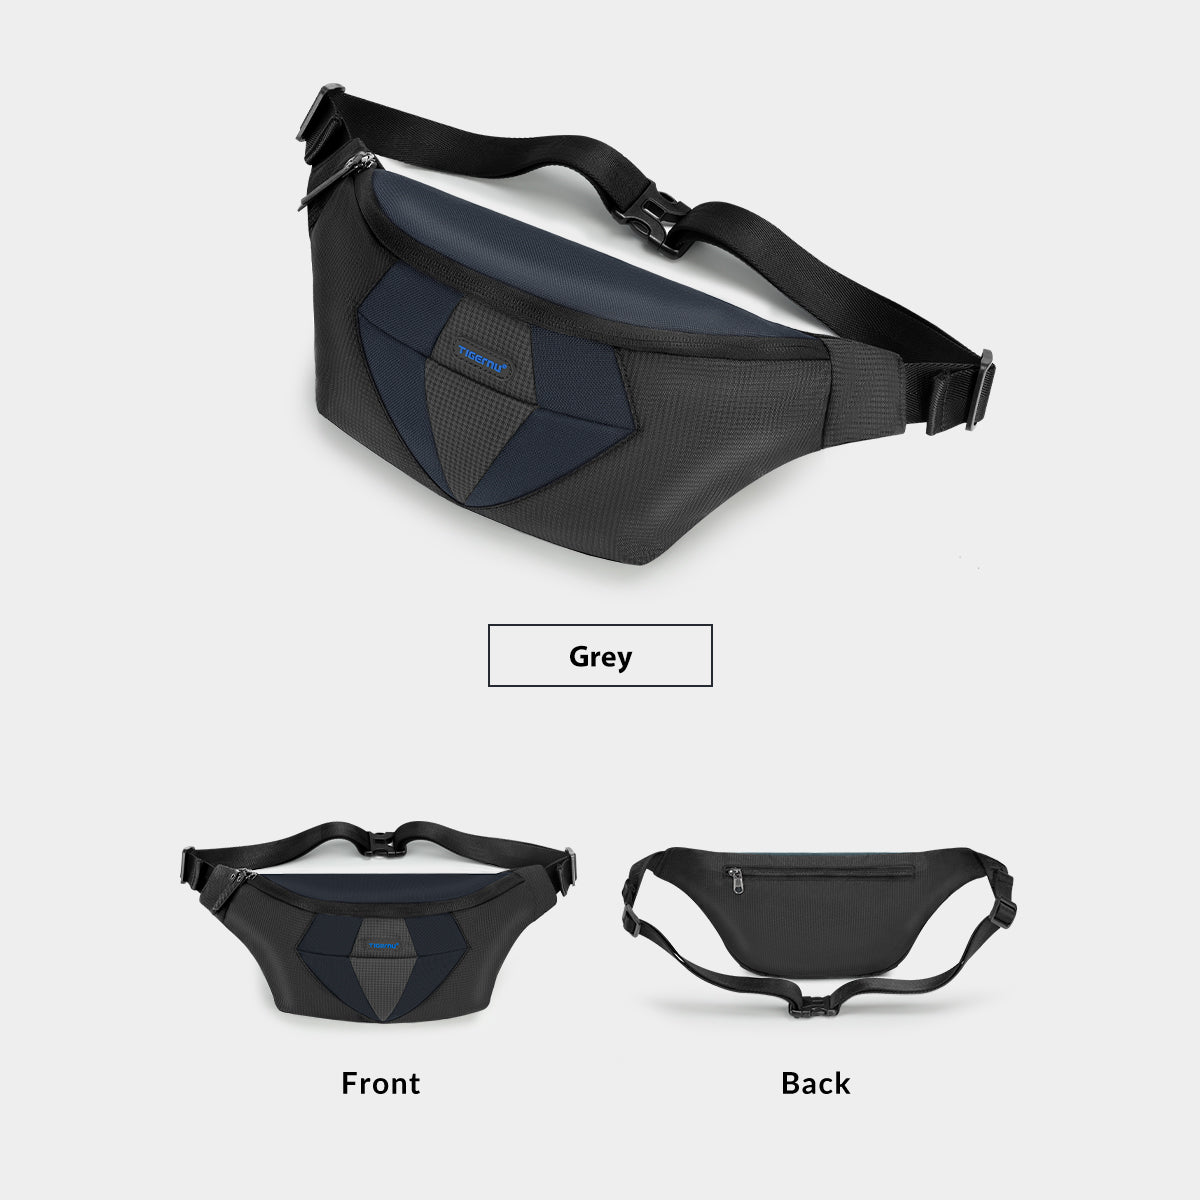 Tigernu T-S8166 Outdoor Sports Pocket Running Waterproof Phone bag Waist Belt Pack Travel Bag for men Bum Bag